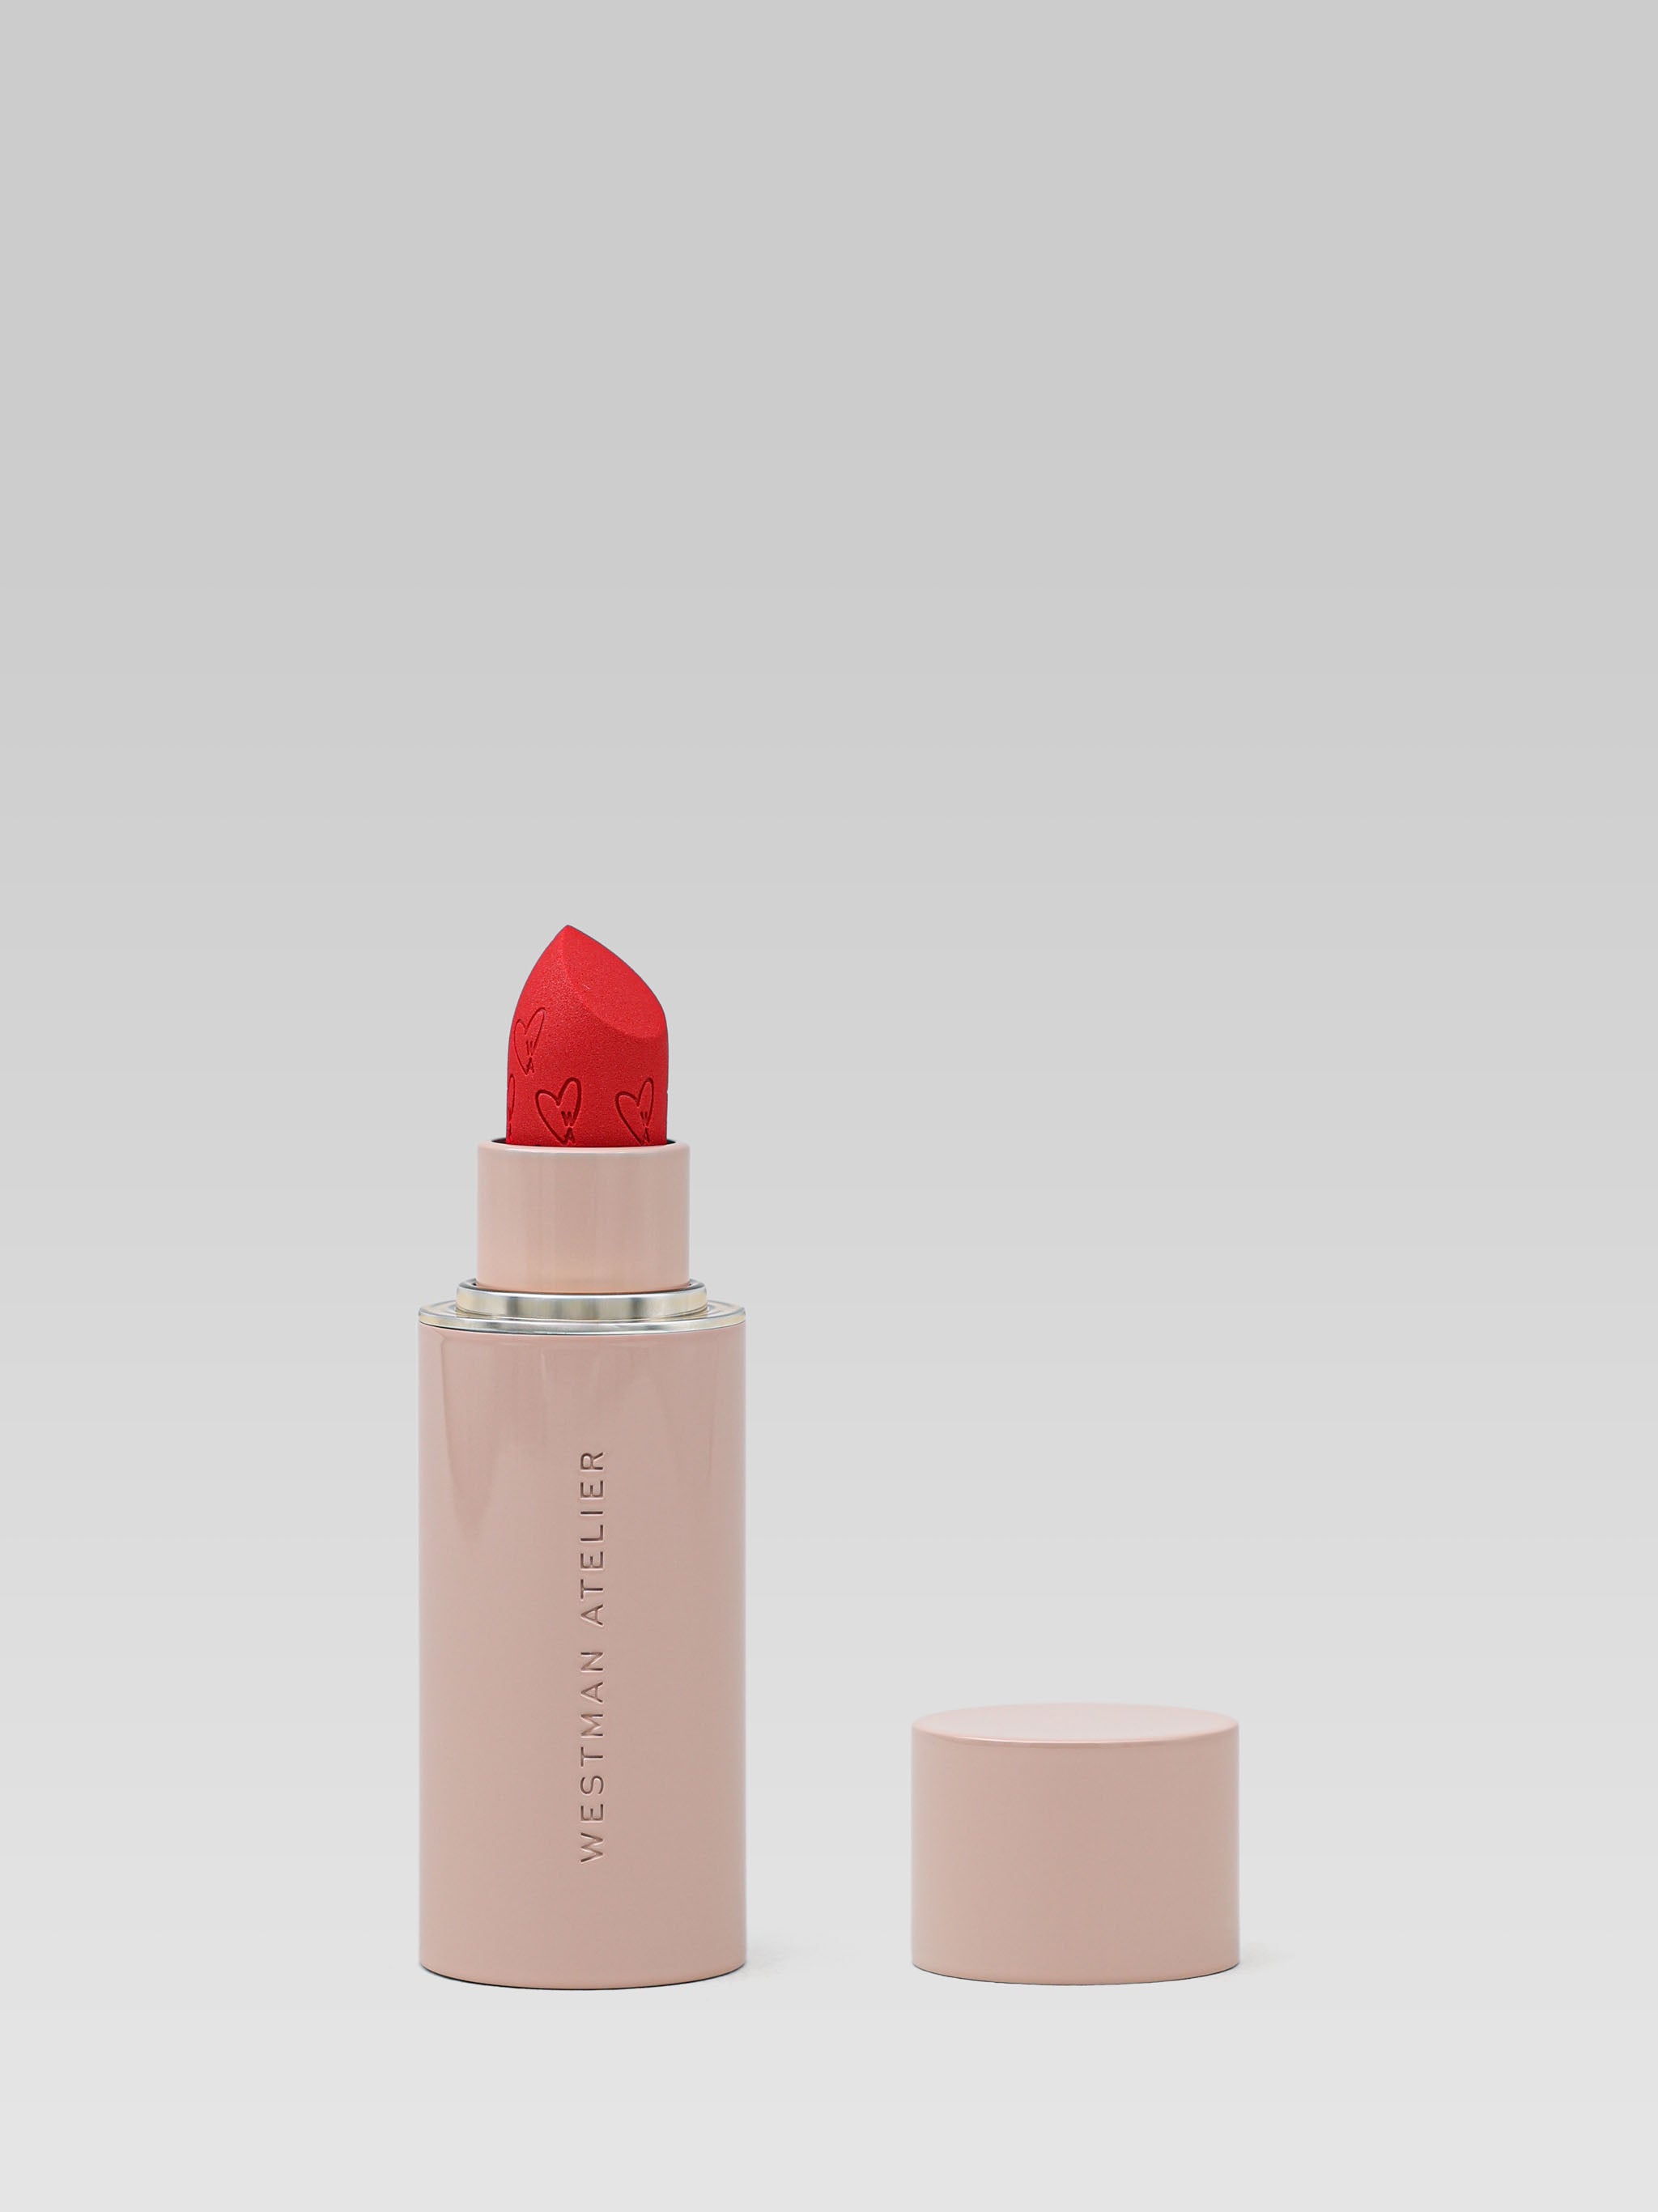 Westman Atelier Lip Suede Matte Lipstick in Pip product shot